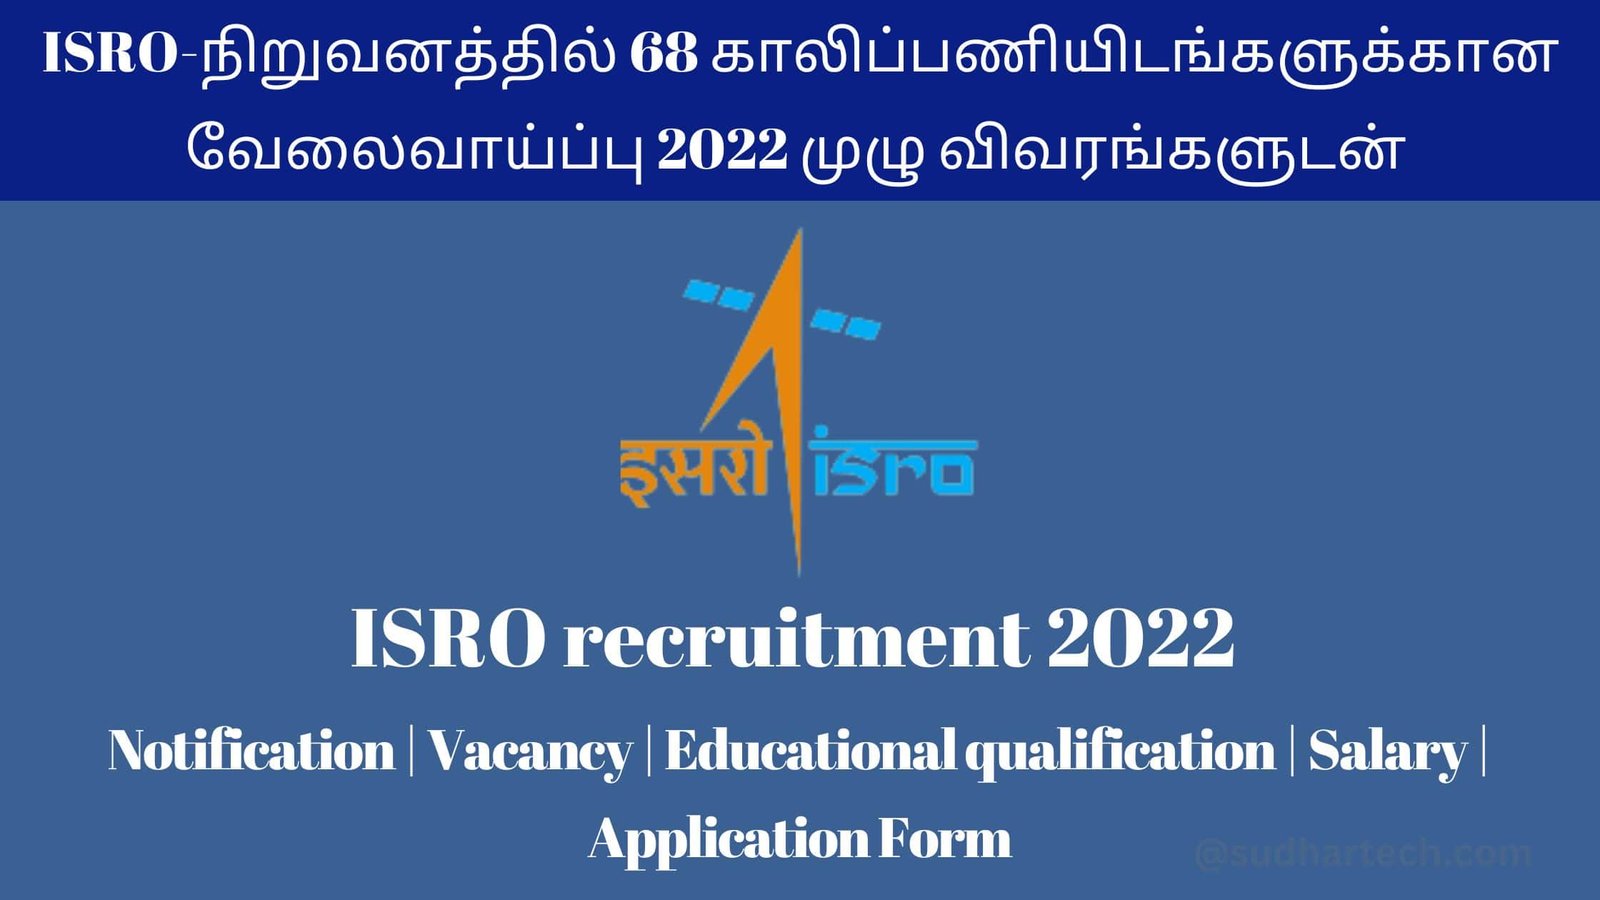 ISRO recruitment 2022 in Tamil